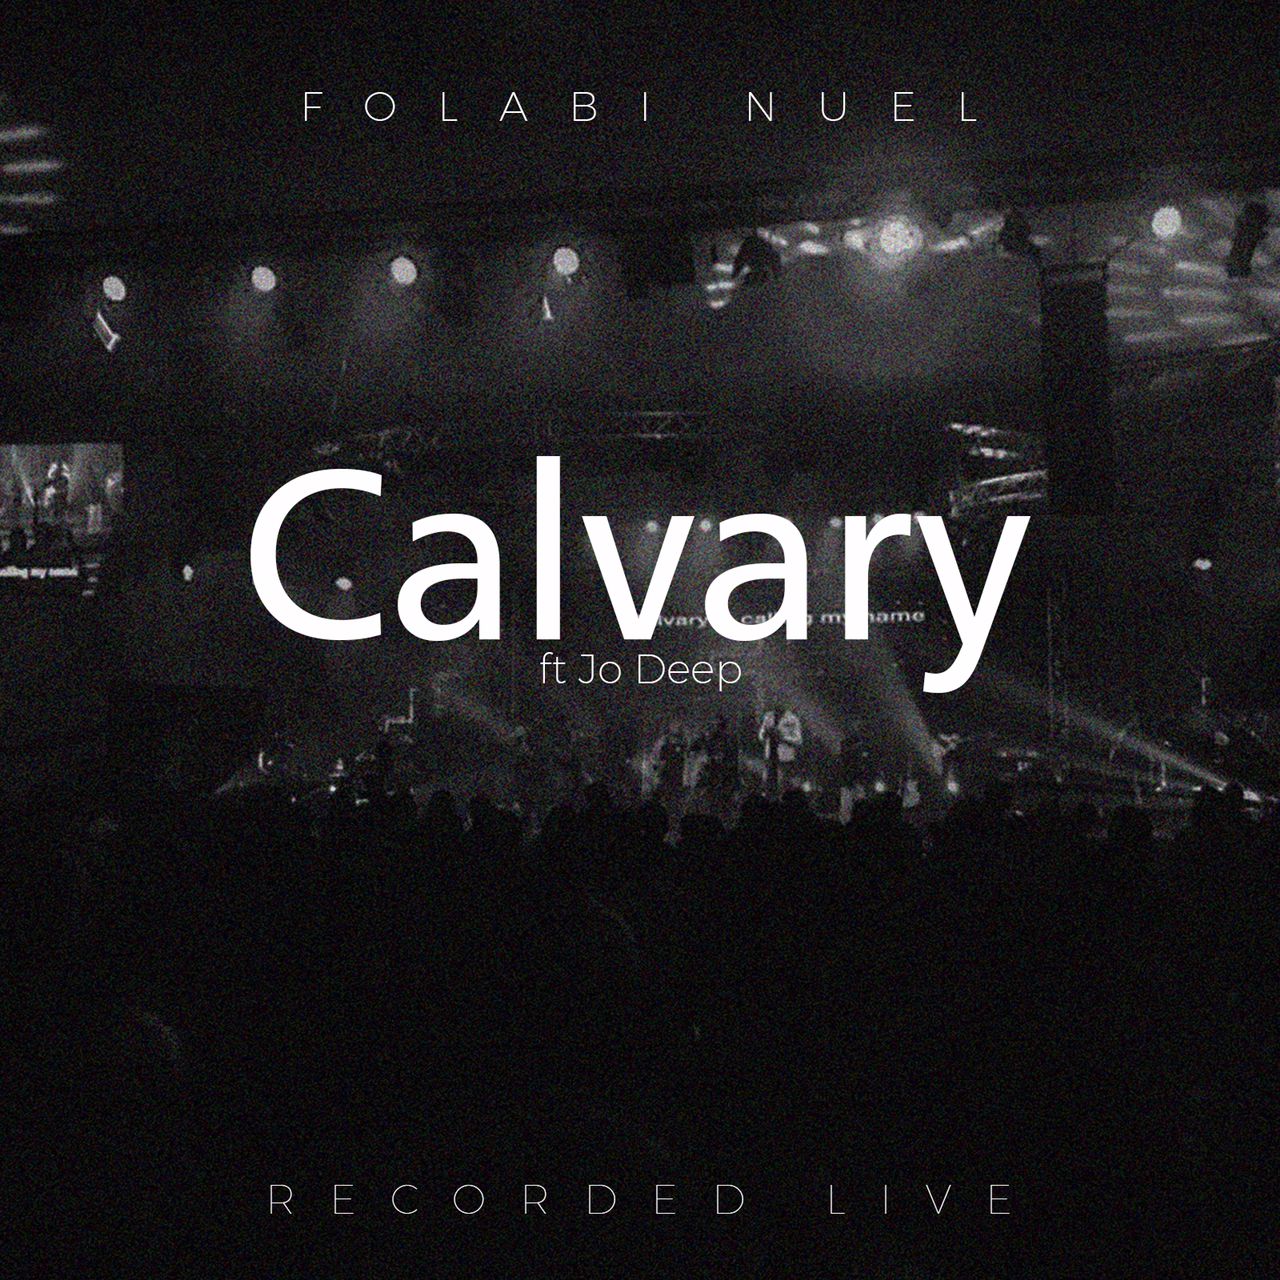 Download Mp3: Folabi Nuel - Calvary ft Jo Deep